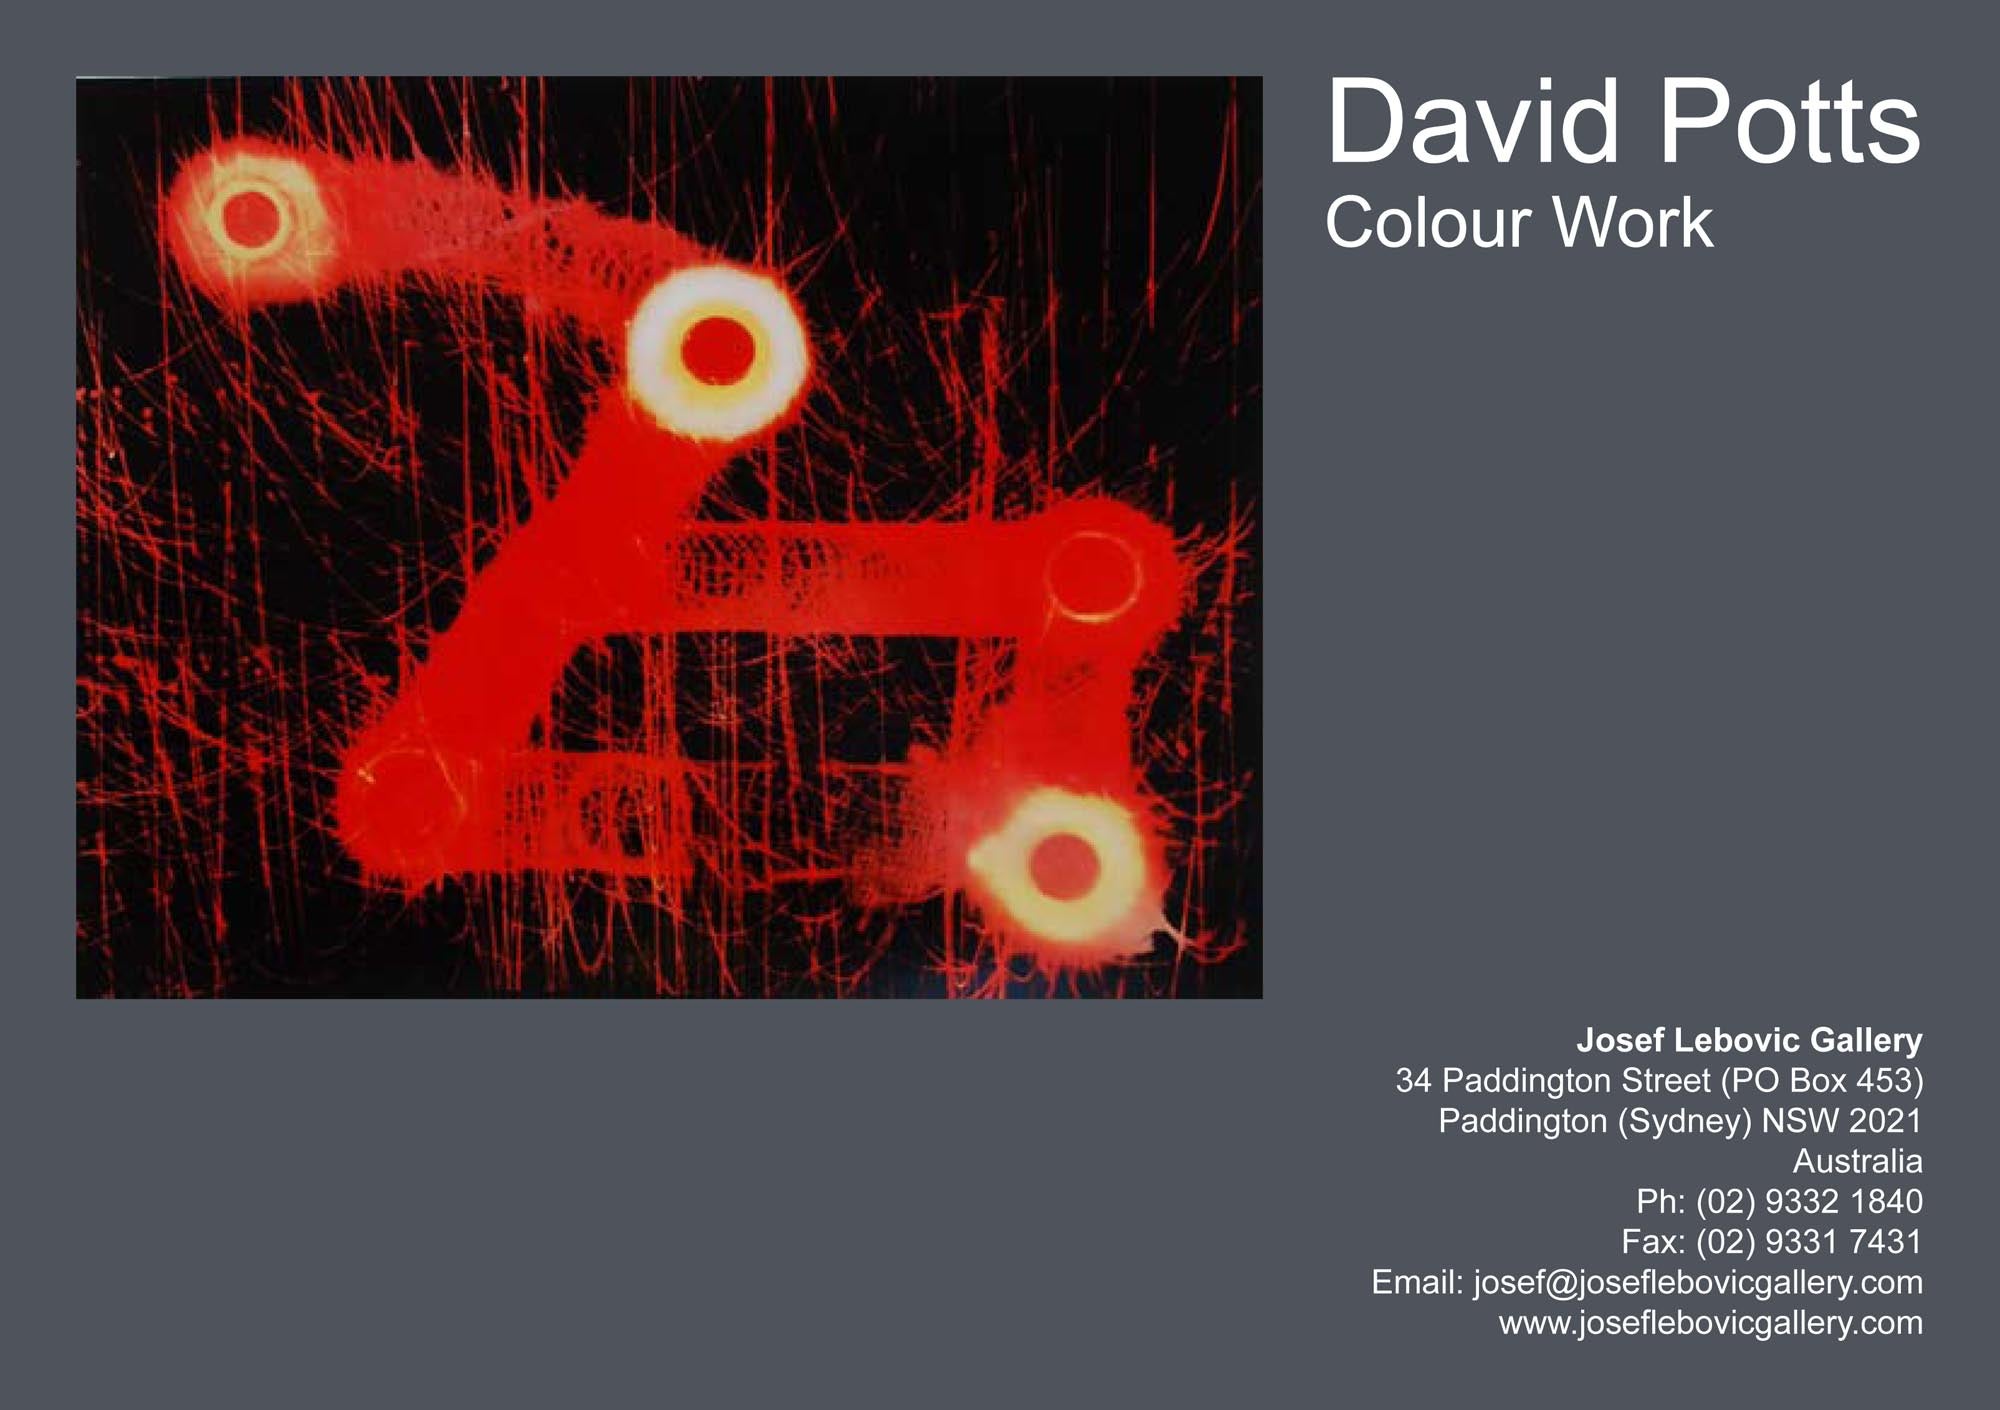 142 - David Potts Colour Work